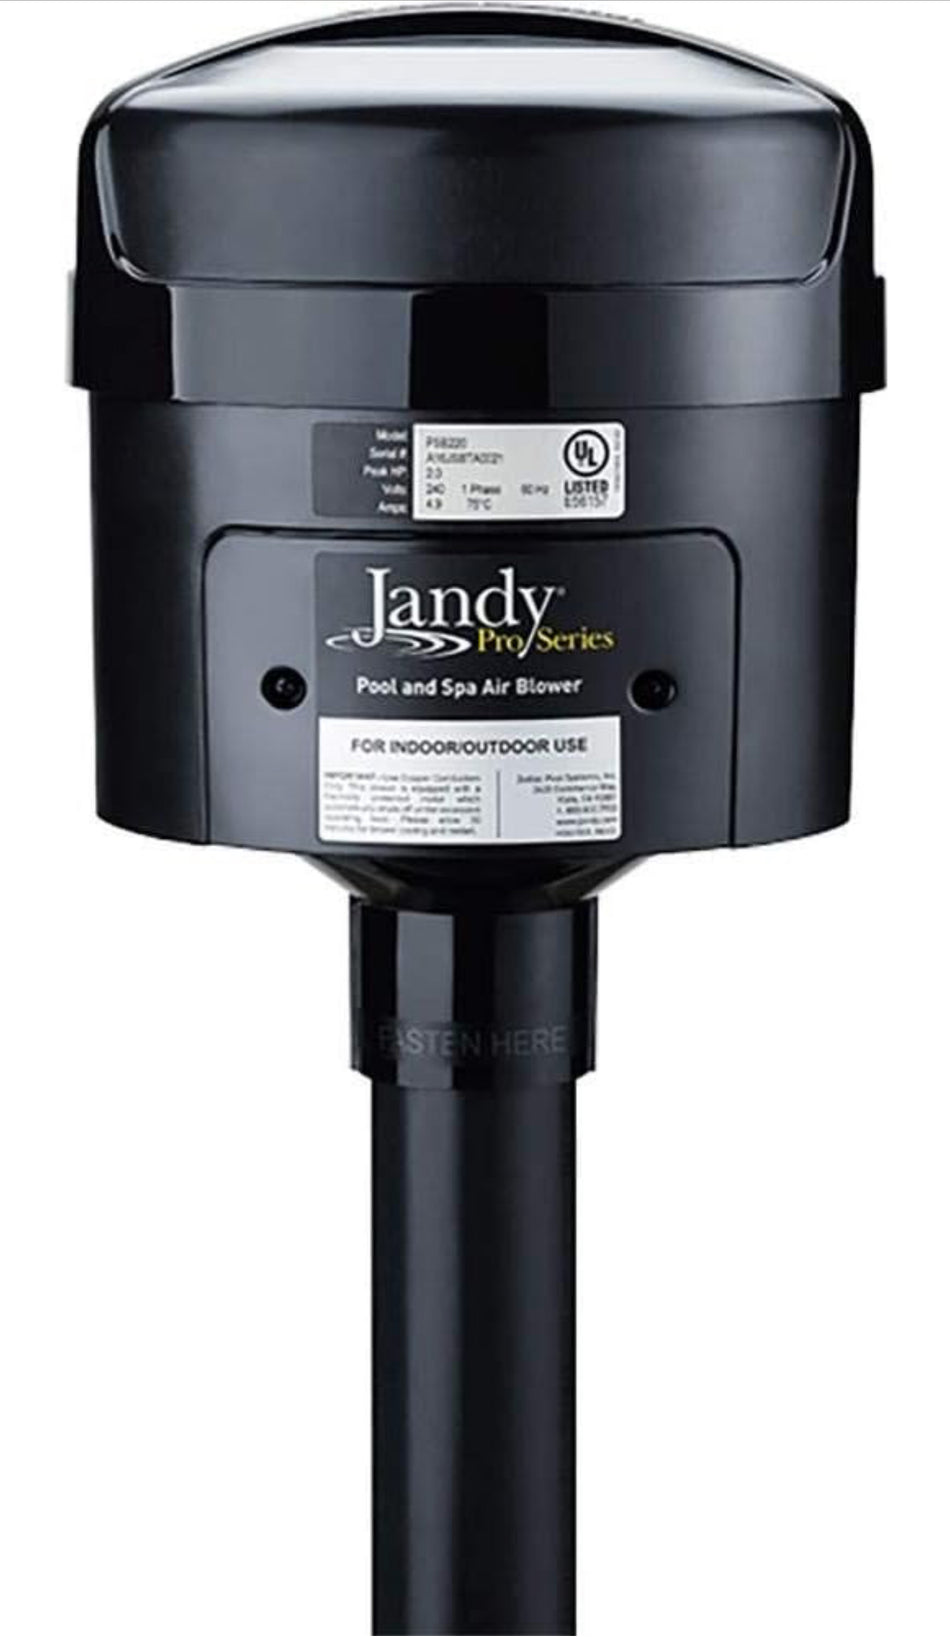 Jandy PSB215. JANDY PRO SERIES POOL & SPA BLOWER, 1.5HP, 240V